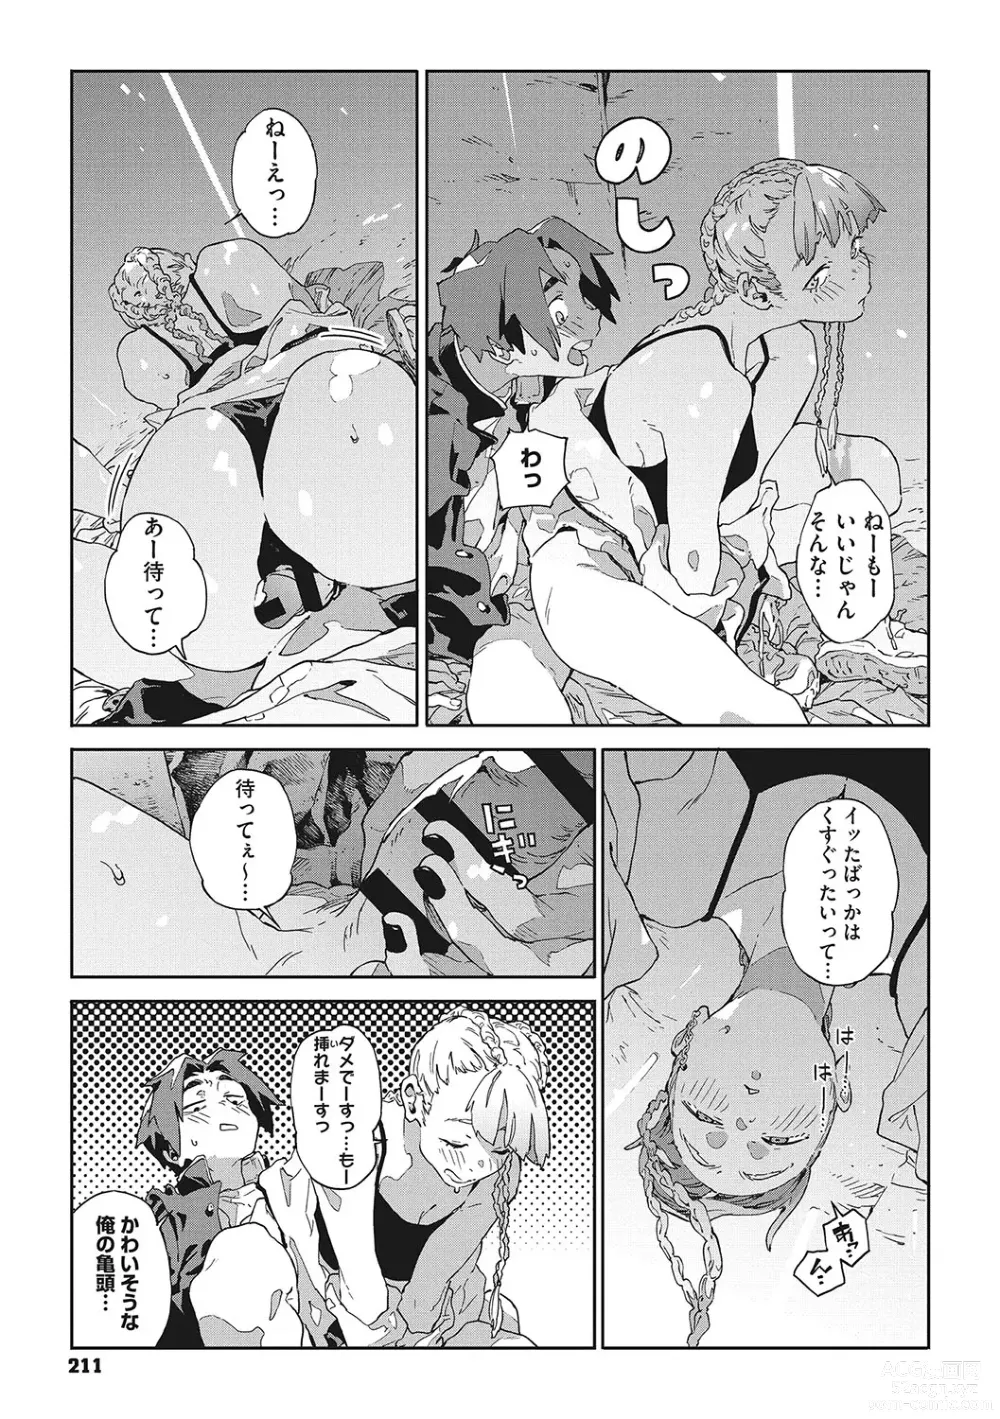 Page 210 of manga Ito o Yoru